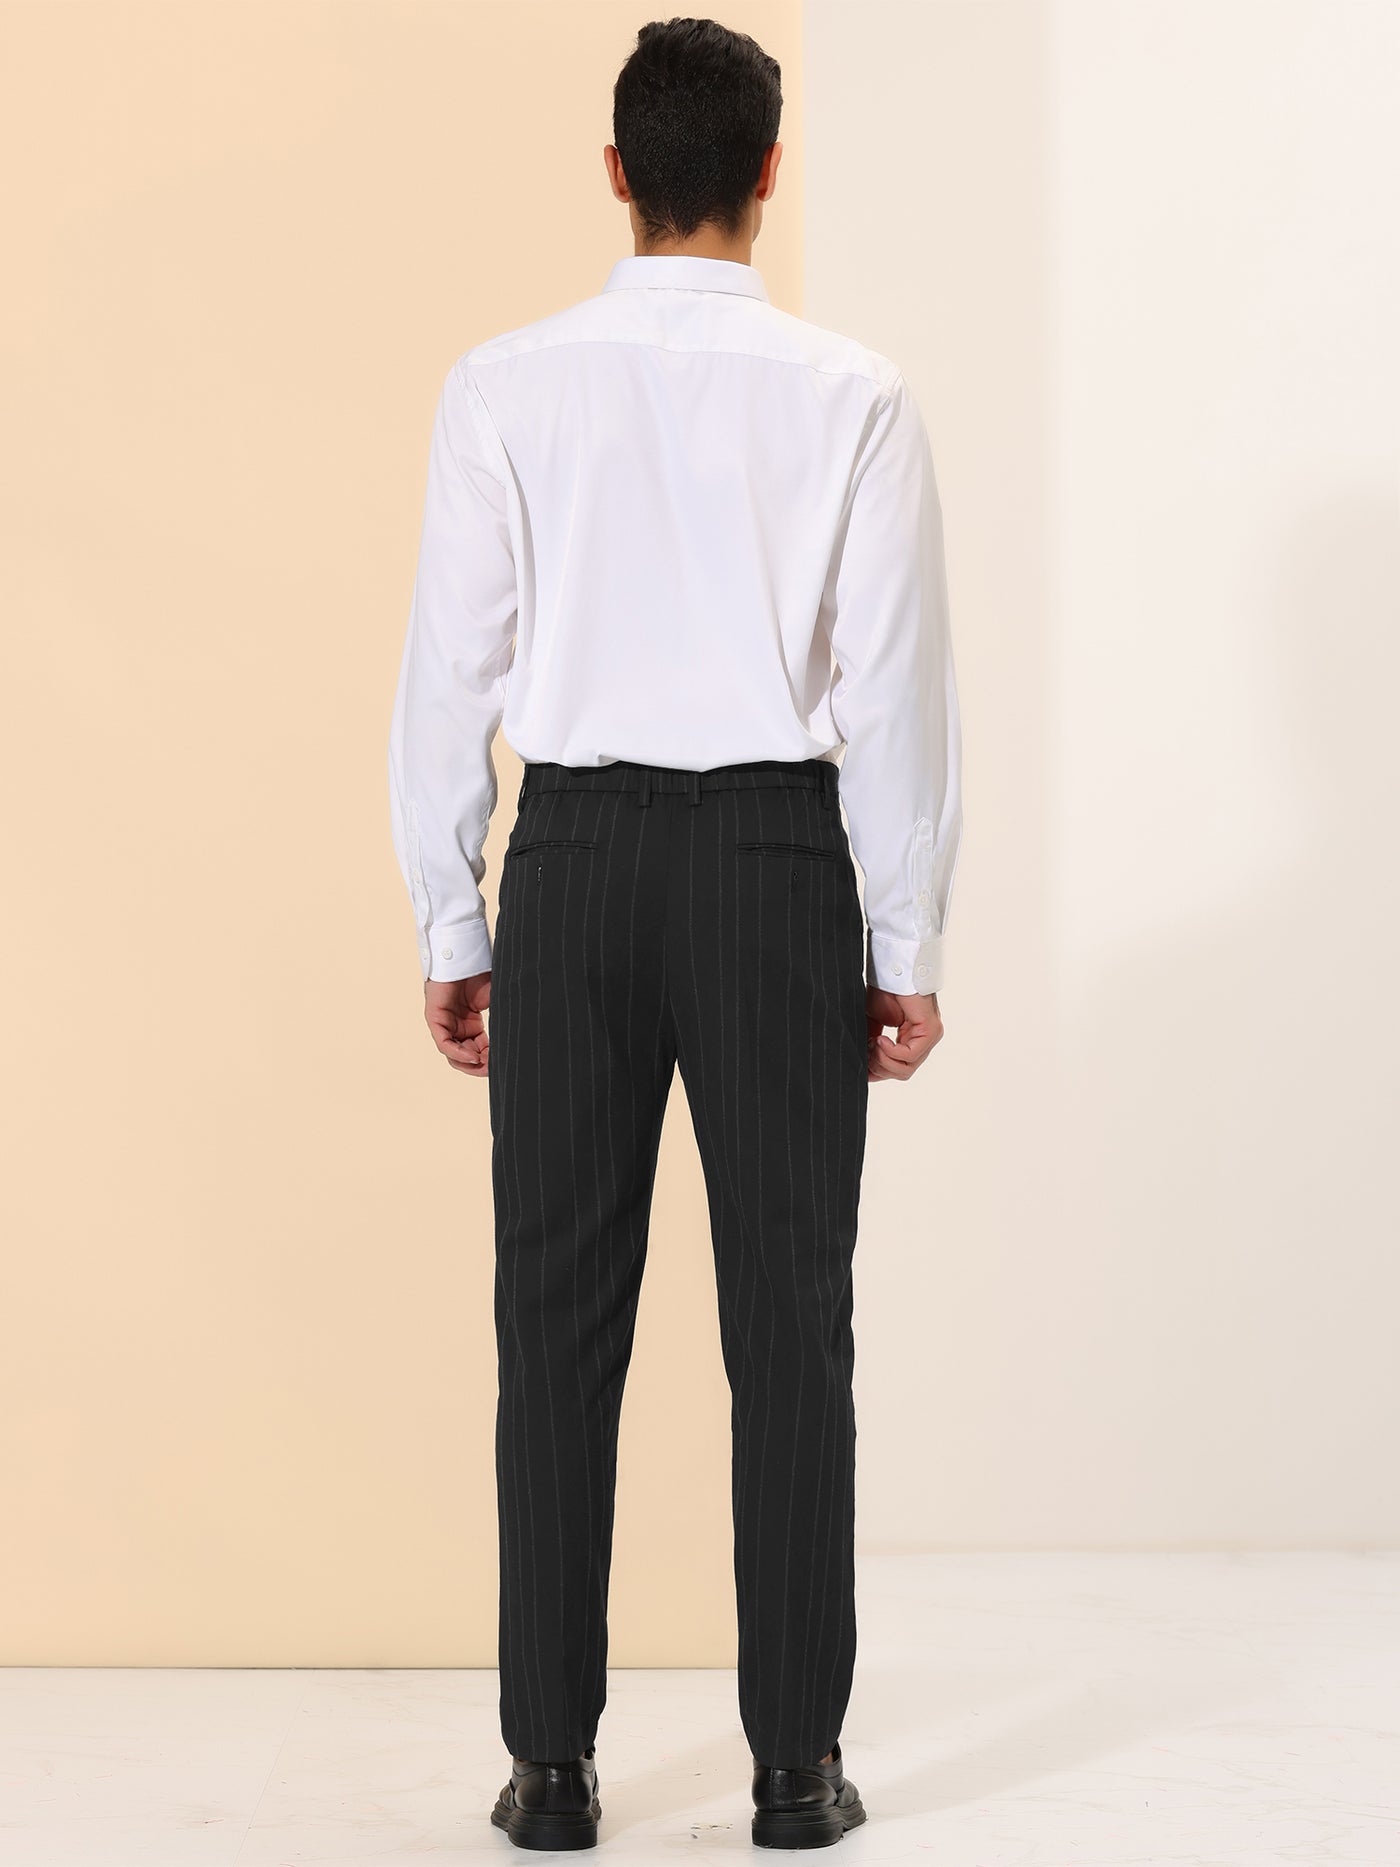 Bublédon Men's Cropped Slim Fit Flat Front Prom Business Striped Dress Pants